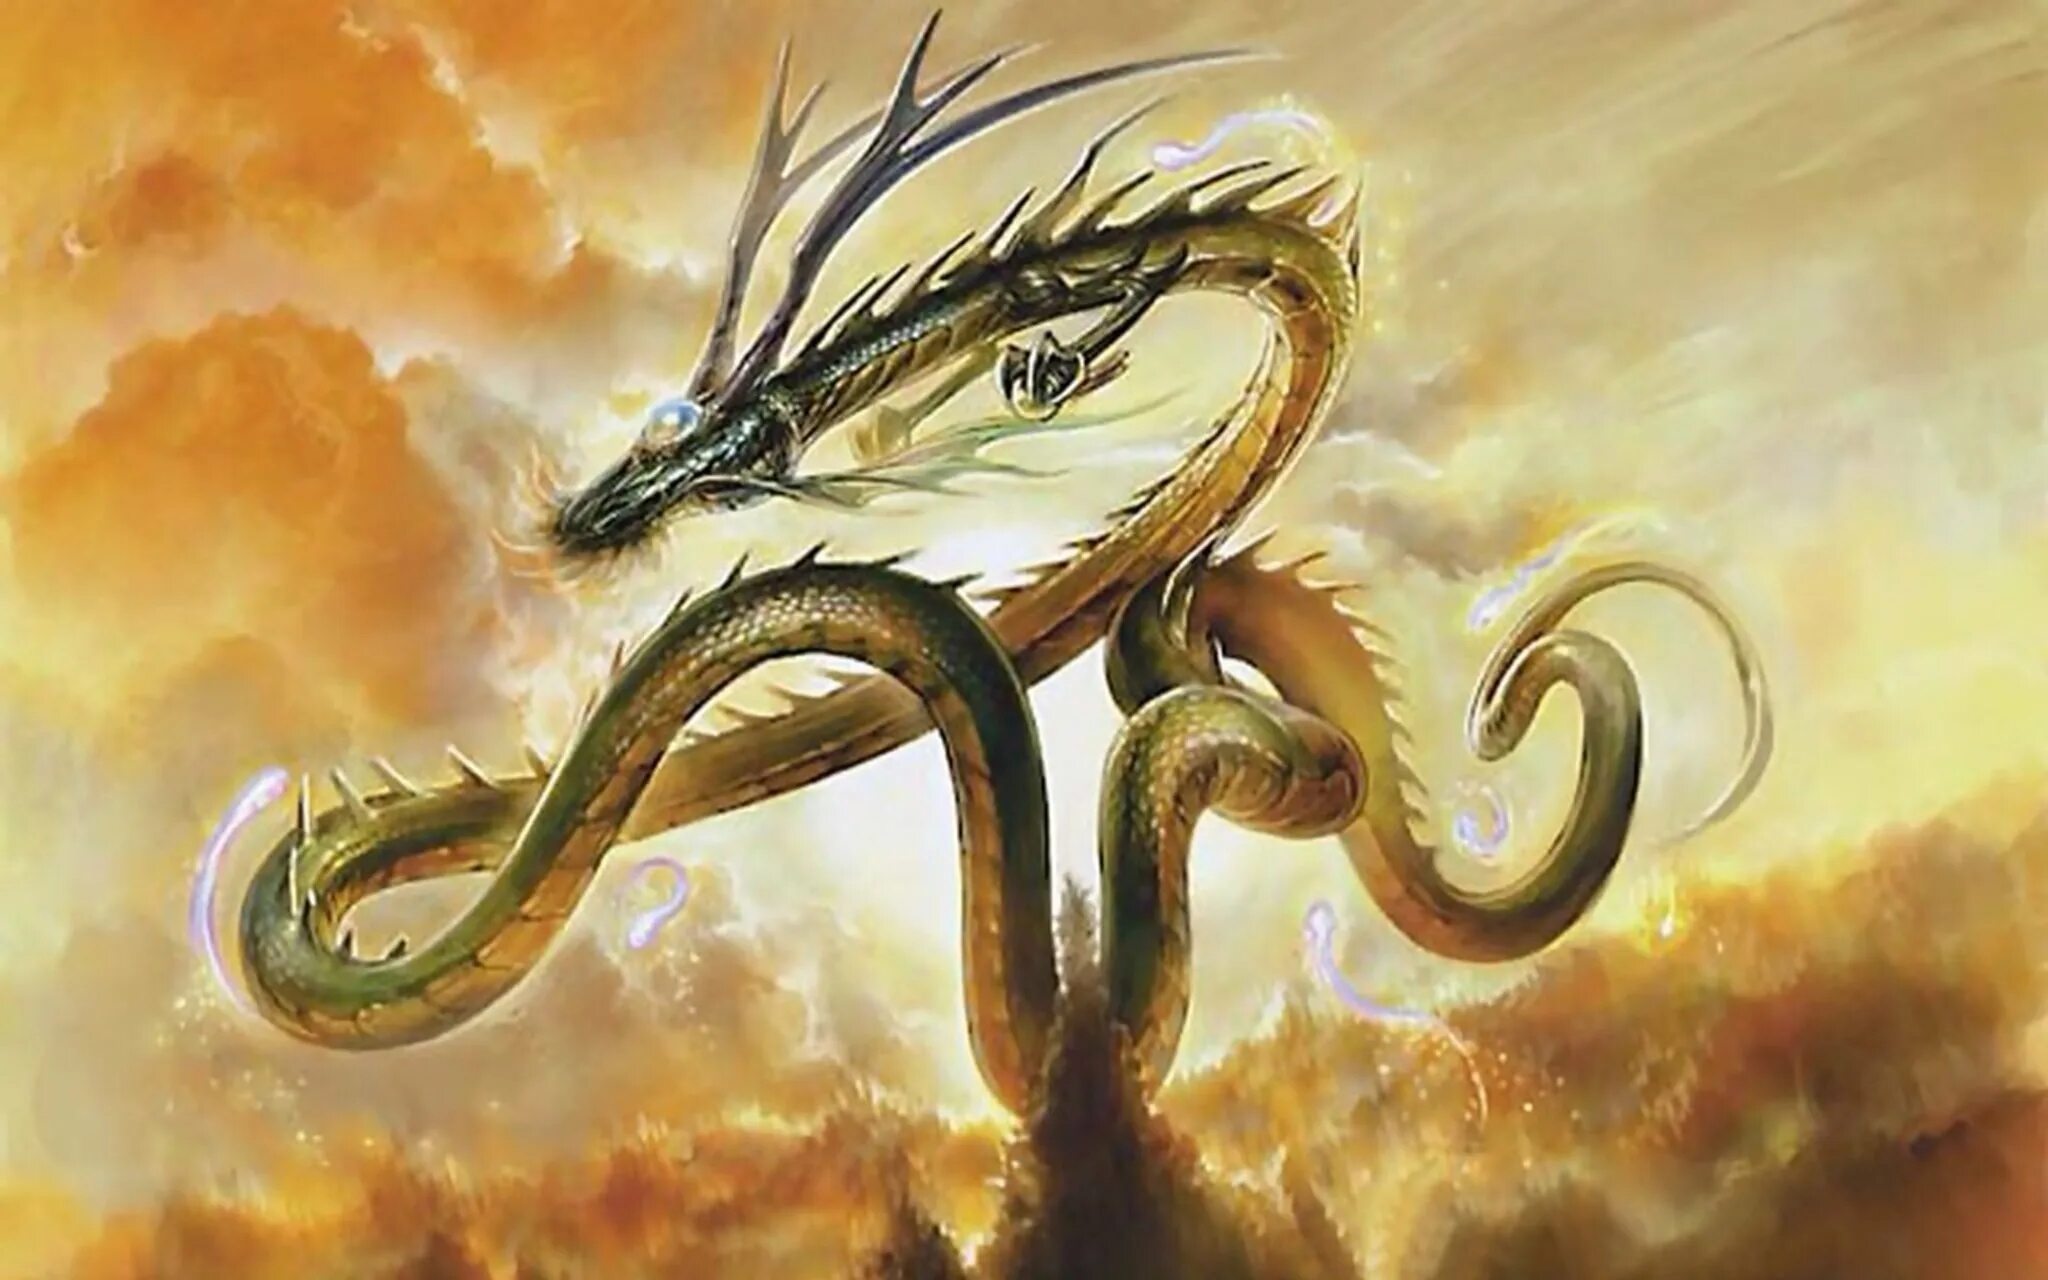 Змеи 3 битва драконов. Зеленый дракон Имуги. Дилун Земляной дракон. Имуги корейский дракон. Имуги змей.